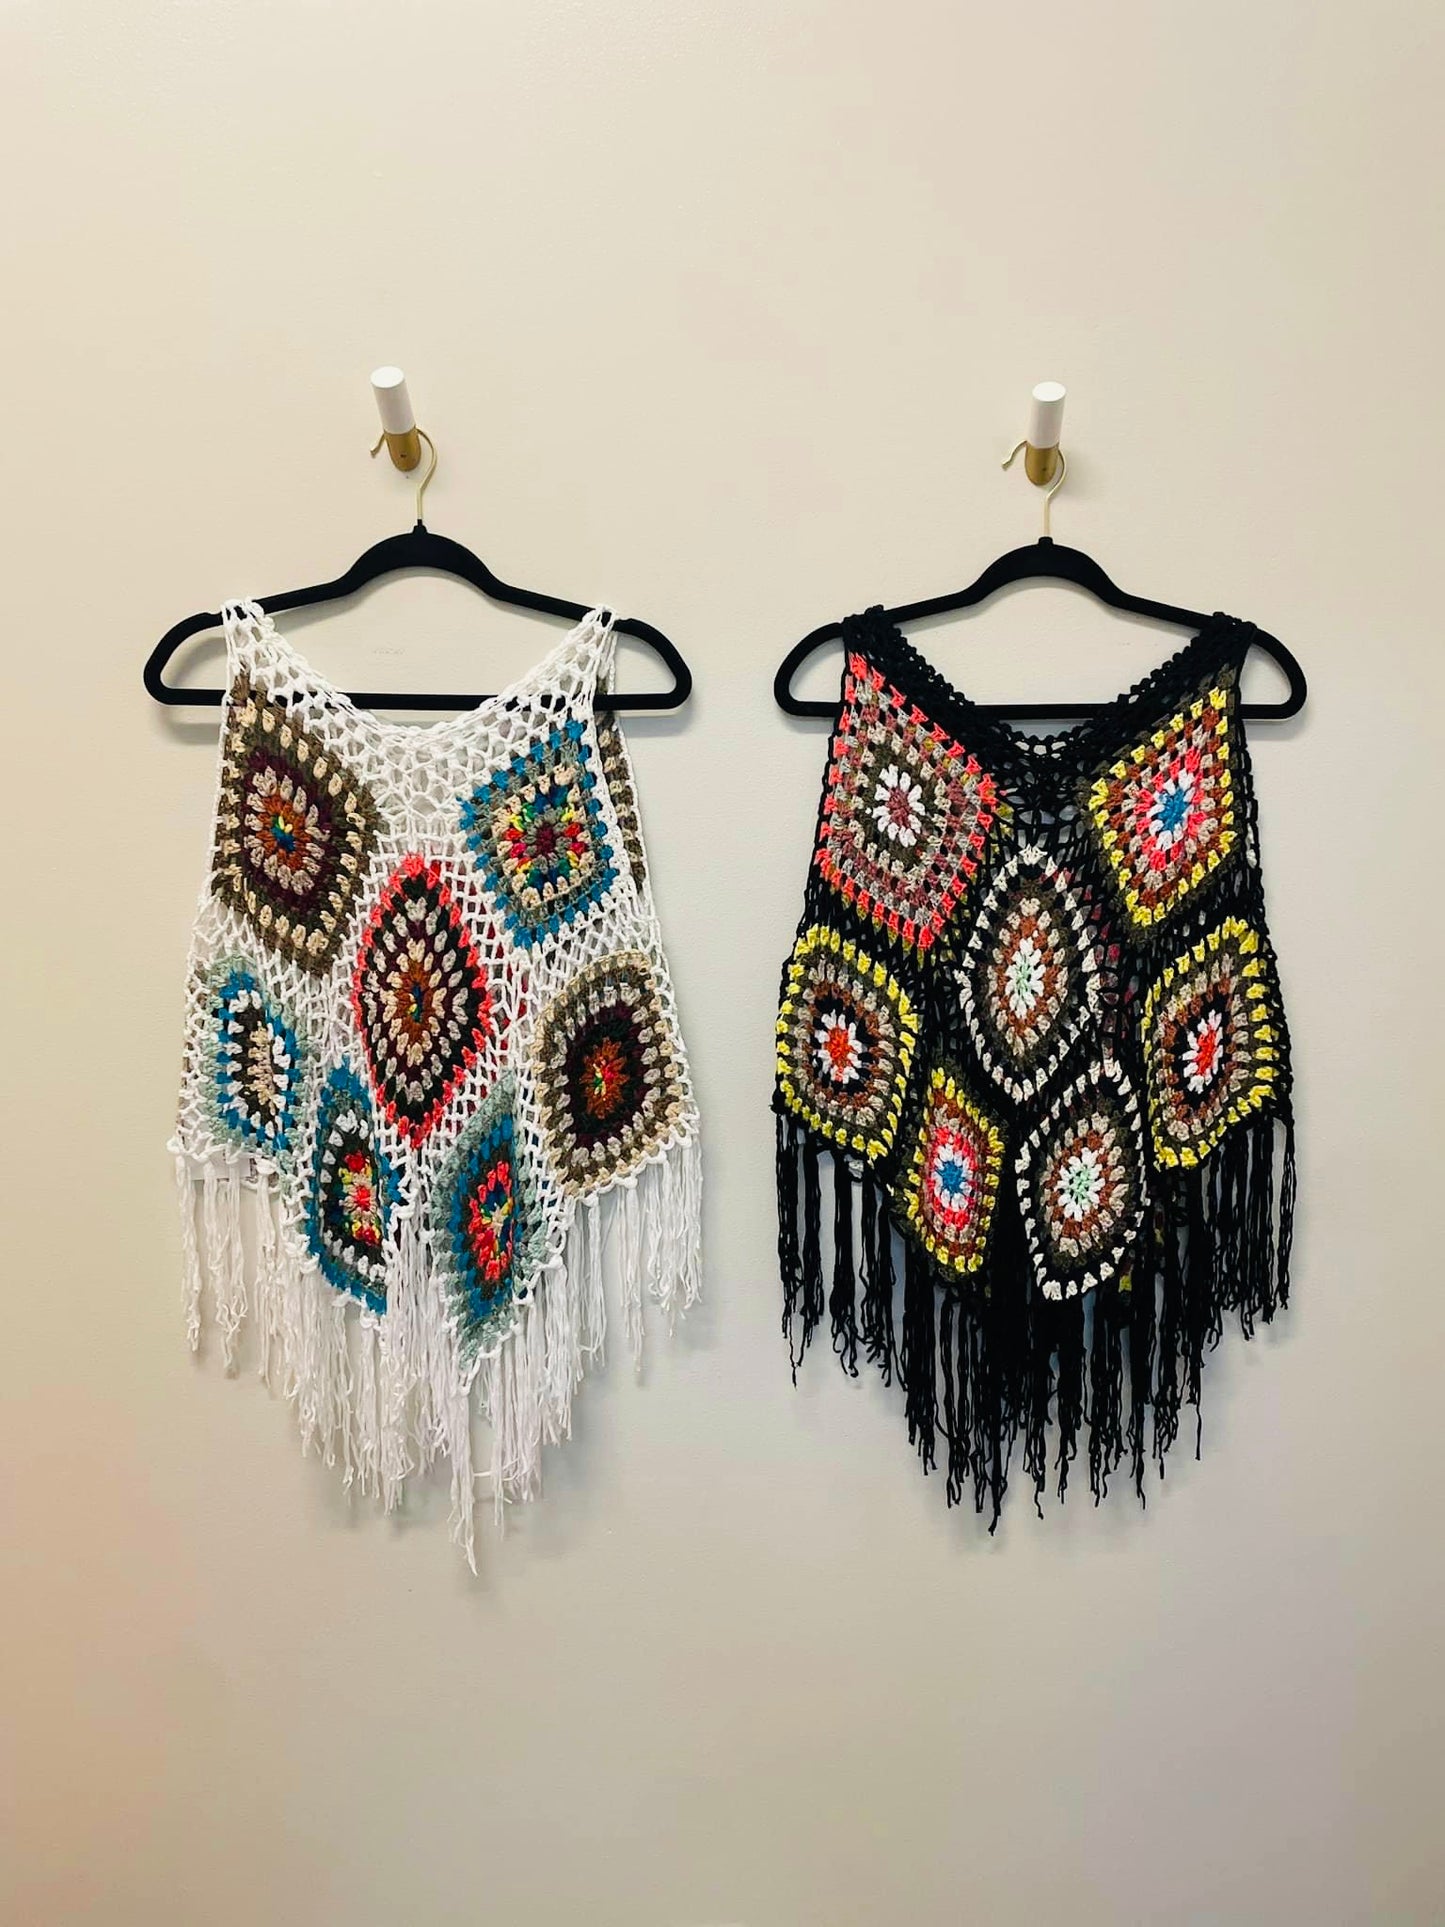 Gypsy Vibes crochet top